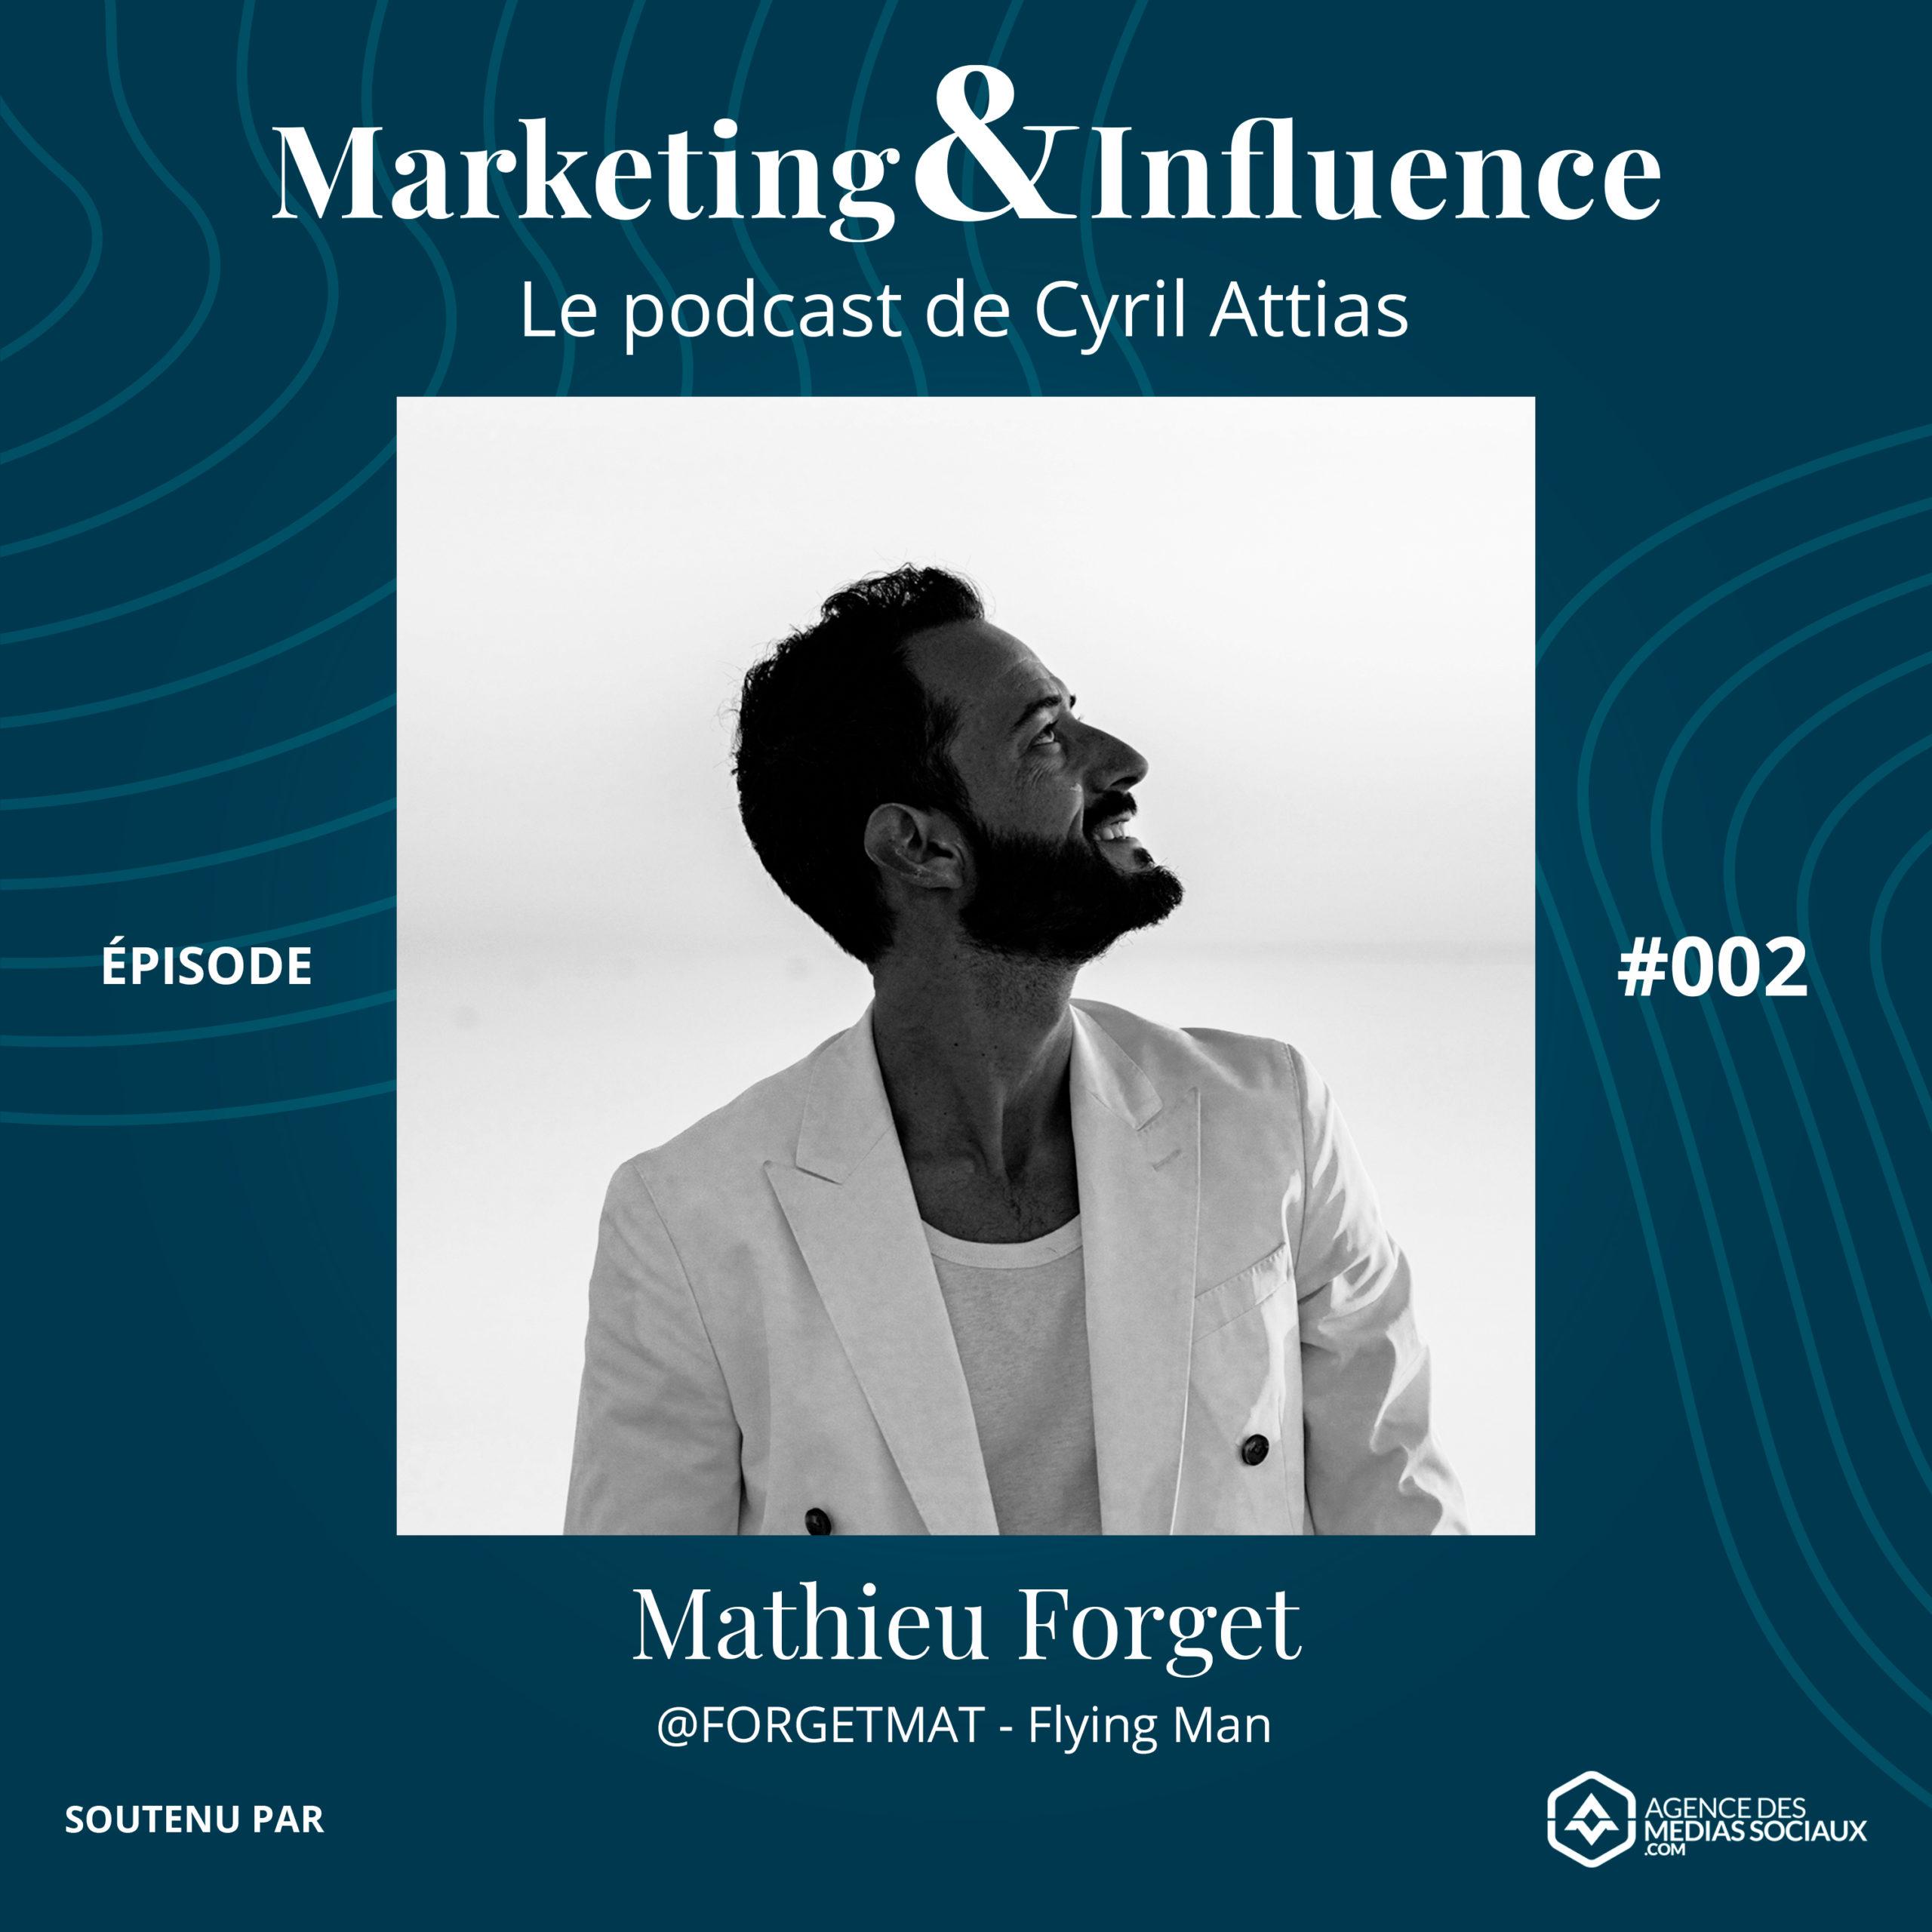 Episode-mathieu-forget-flying-man-podcast-cyril-attias-marketing-influence